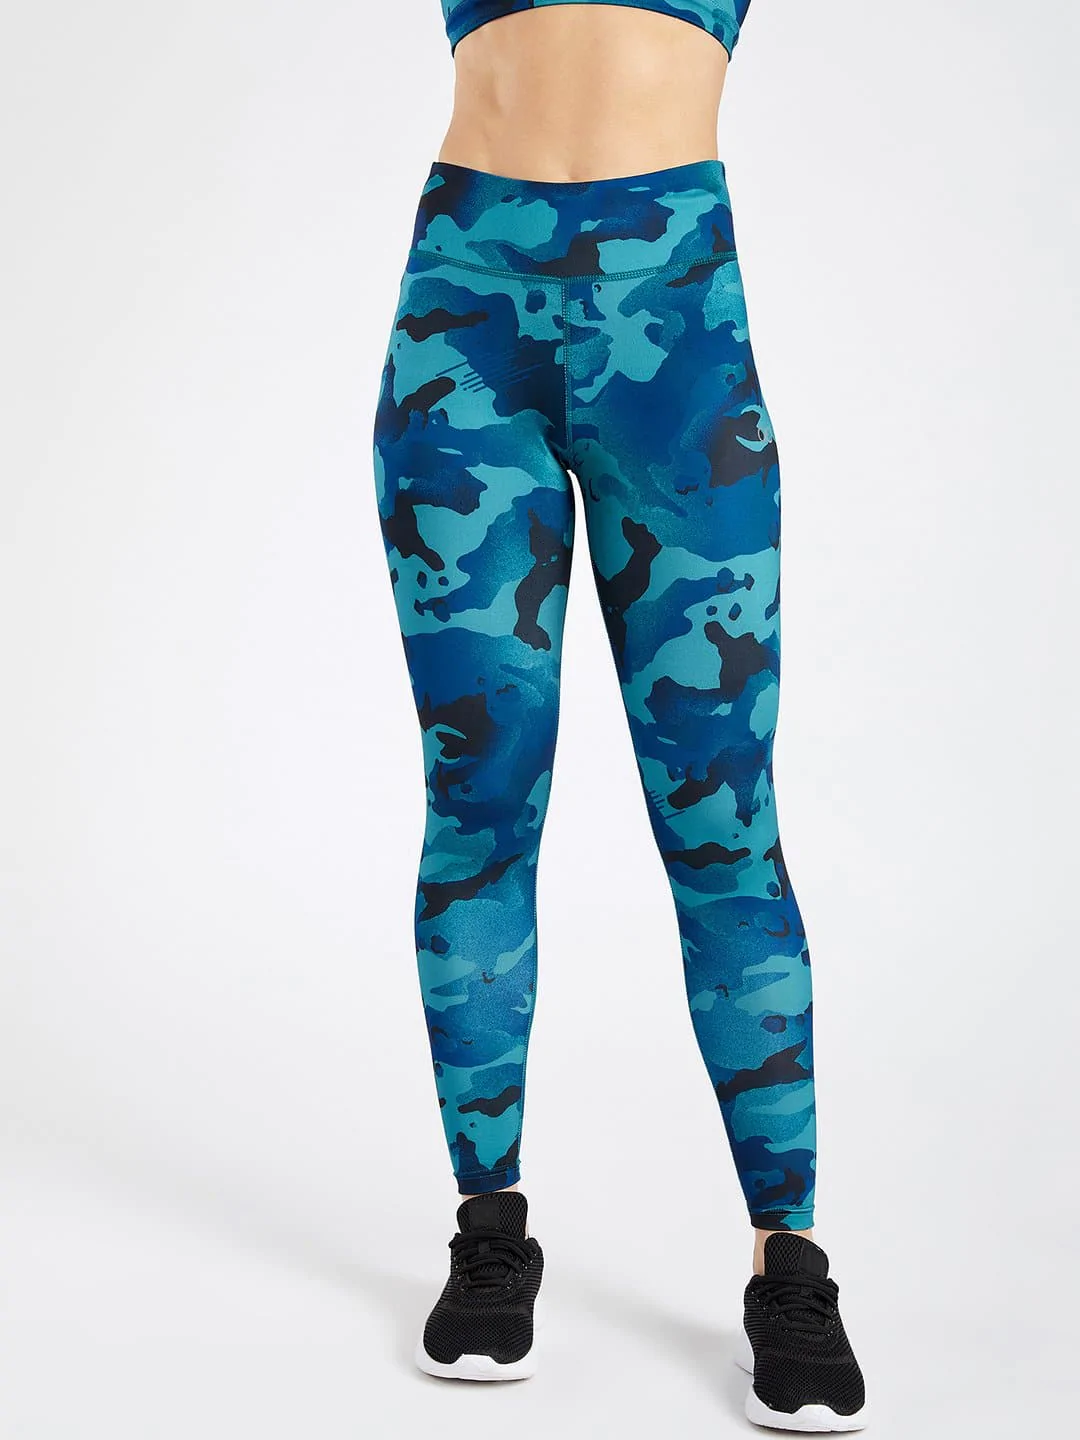 Gavelo Sniper Blue Camo Compression Pants – Urban Gym Wear